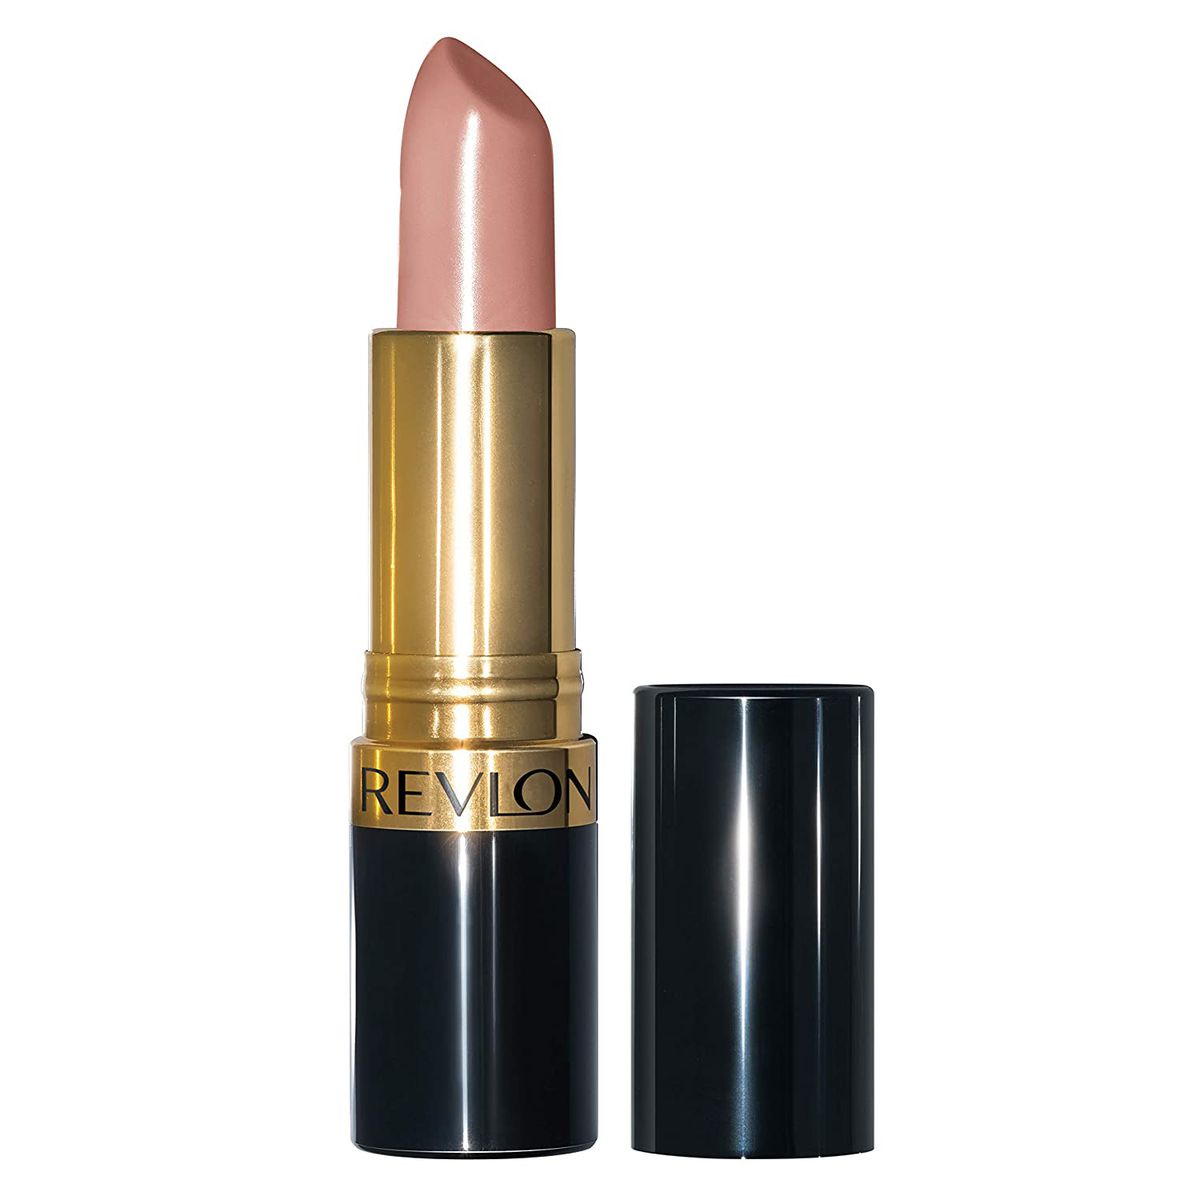 Revlon Super Lustrous Lipstick in Bare It All